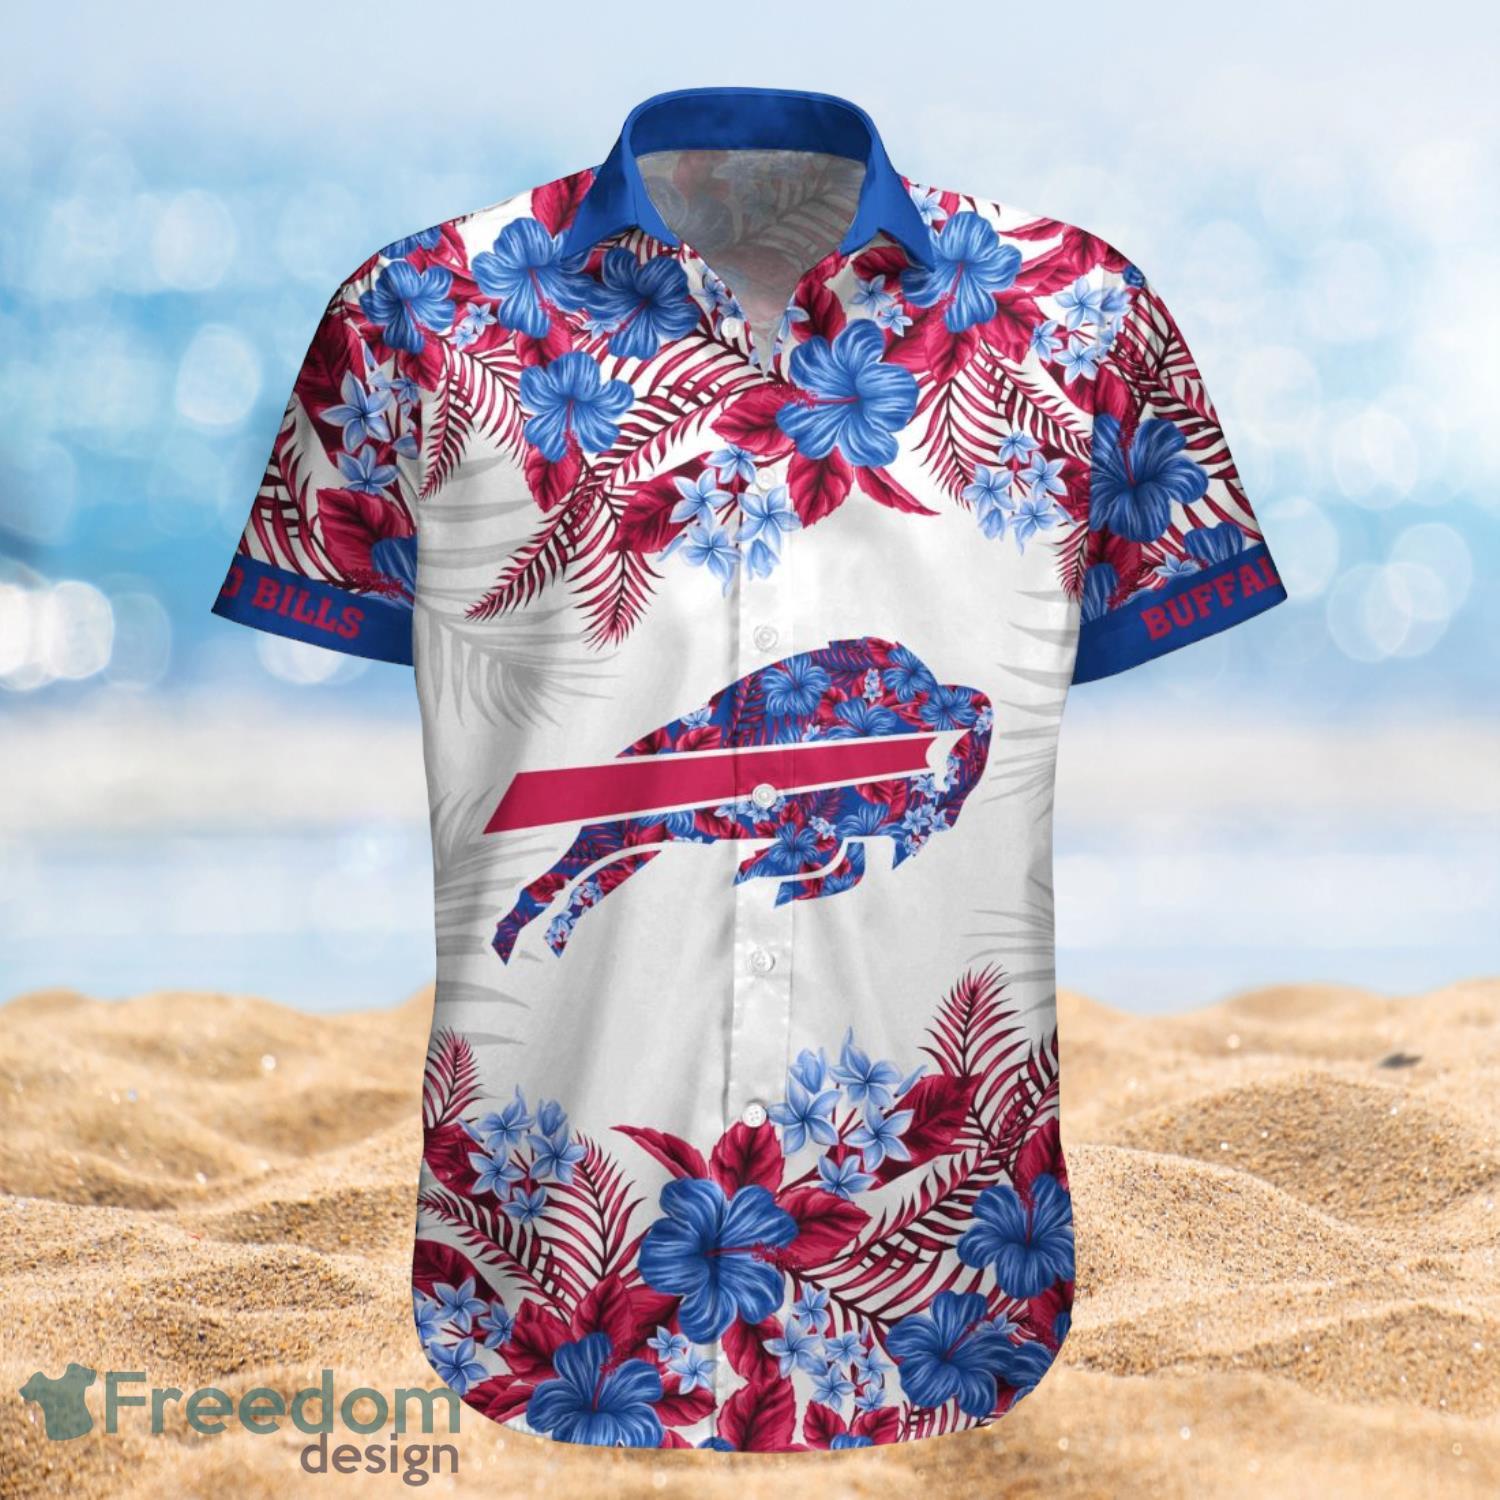 Buffalo Bills Summer Beach Shirt and Shorts Full Over Print Product Photo 1